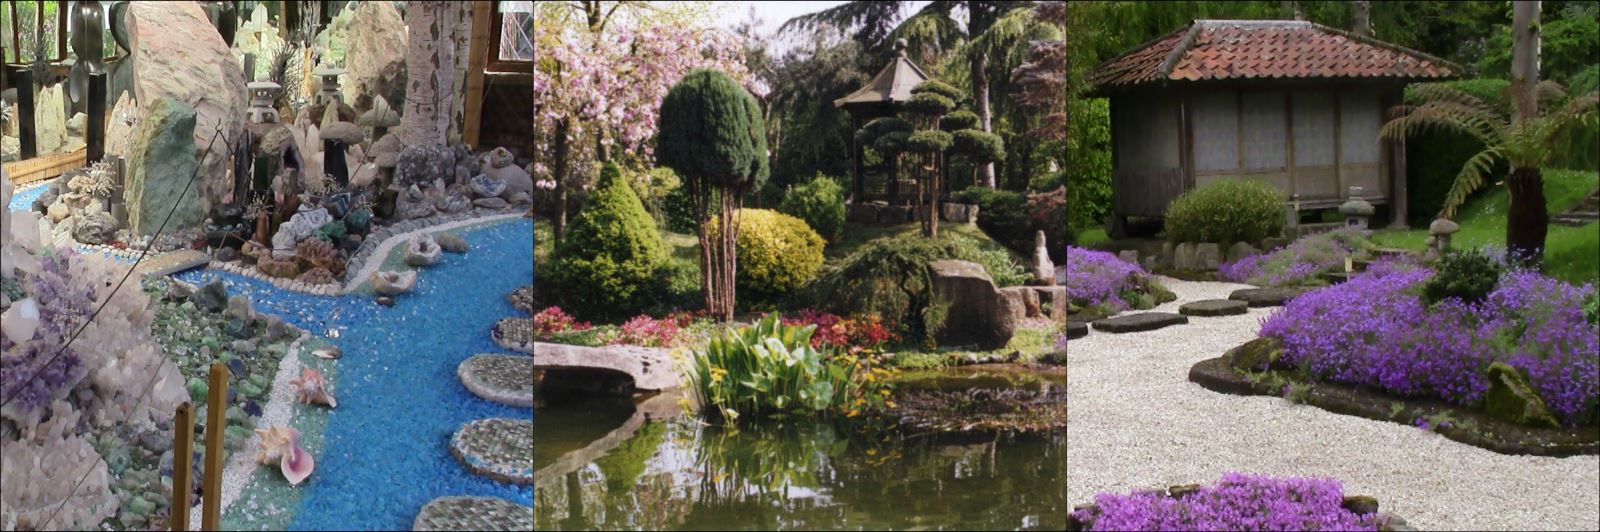 Beautiful Gardens To Visit In Nottinghamshire Visit Nottinghamshire